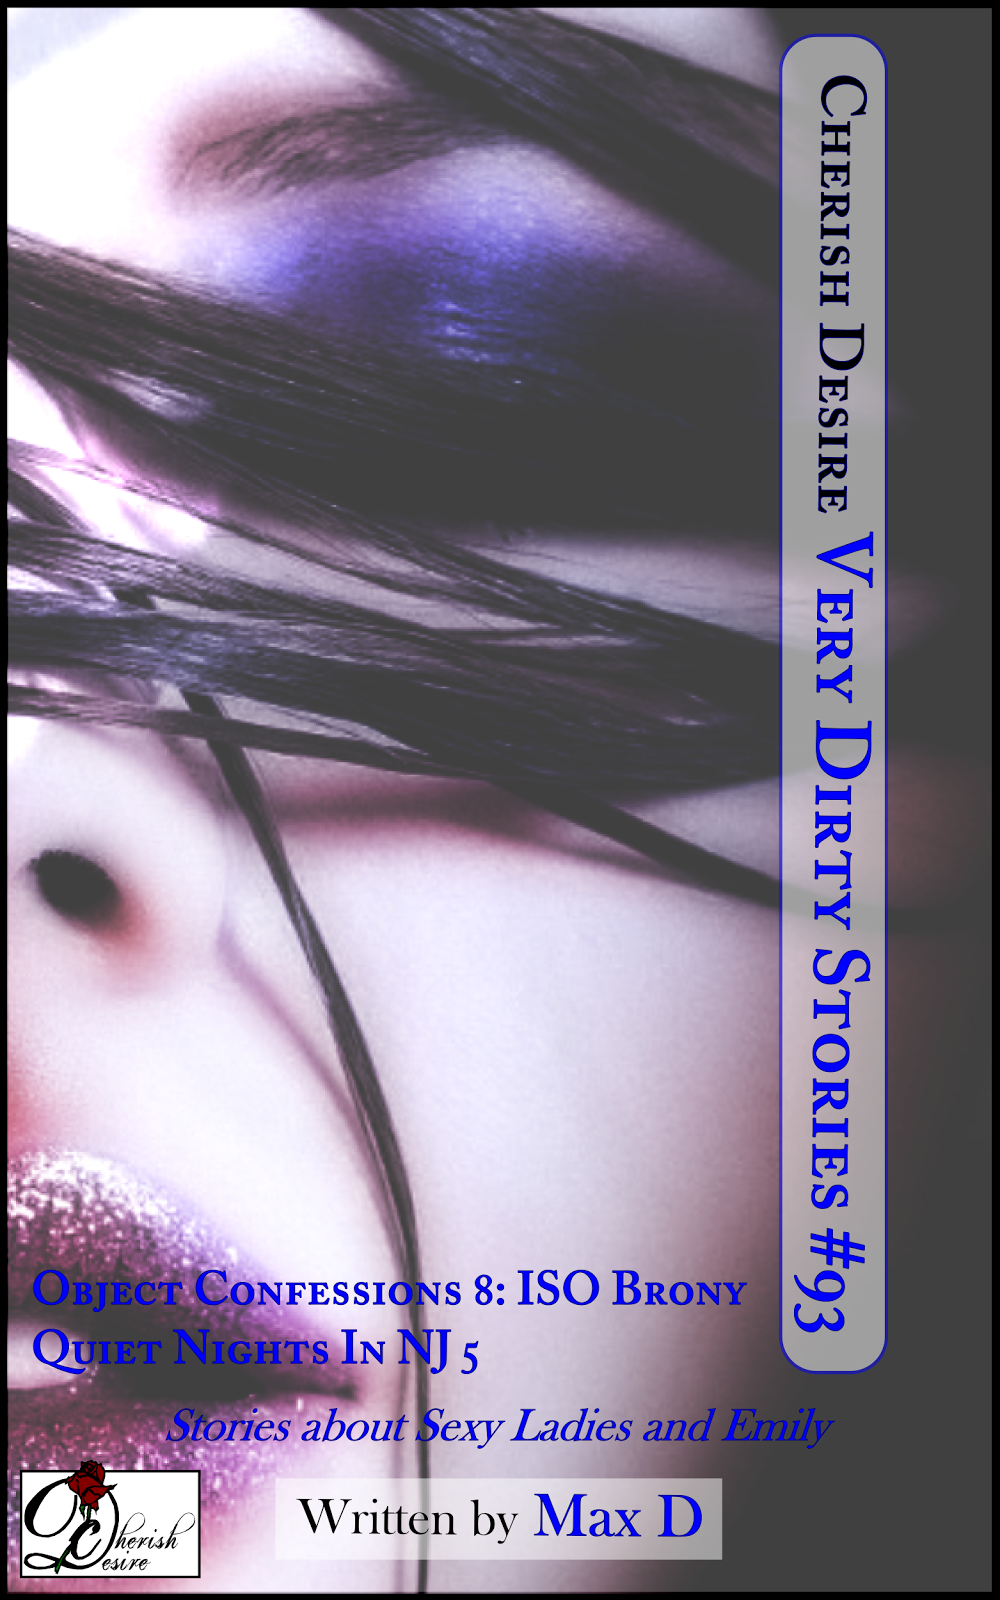 Cherish Desire: Very Dirty Stories #93, Max D, erotica